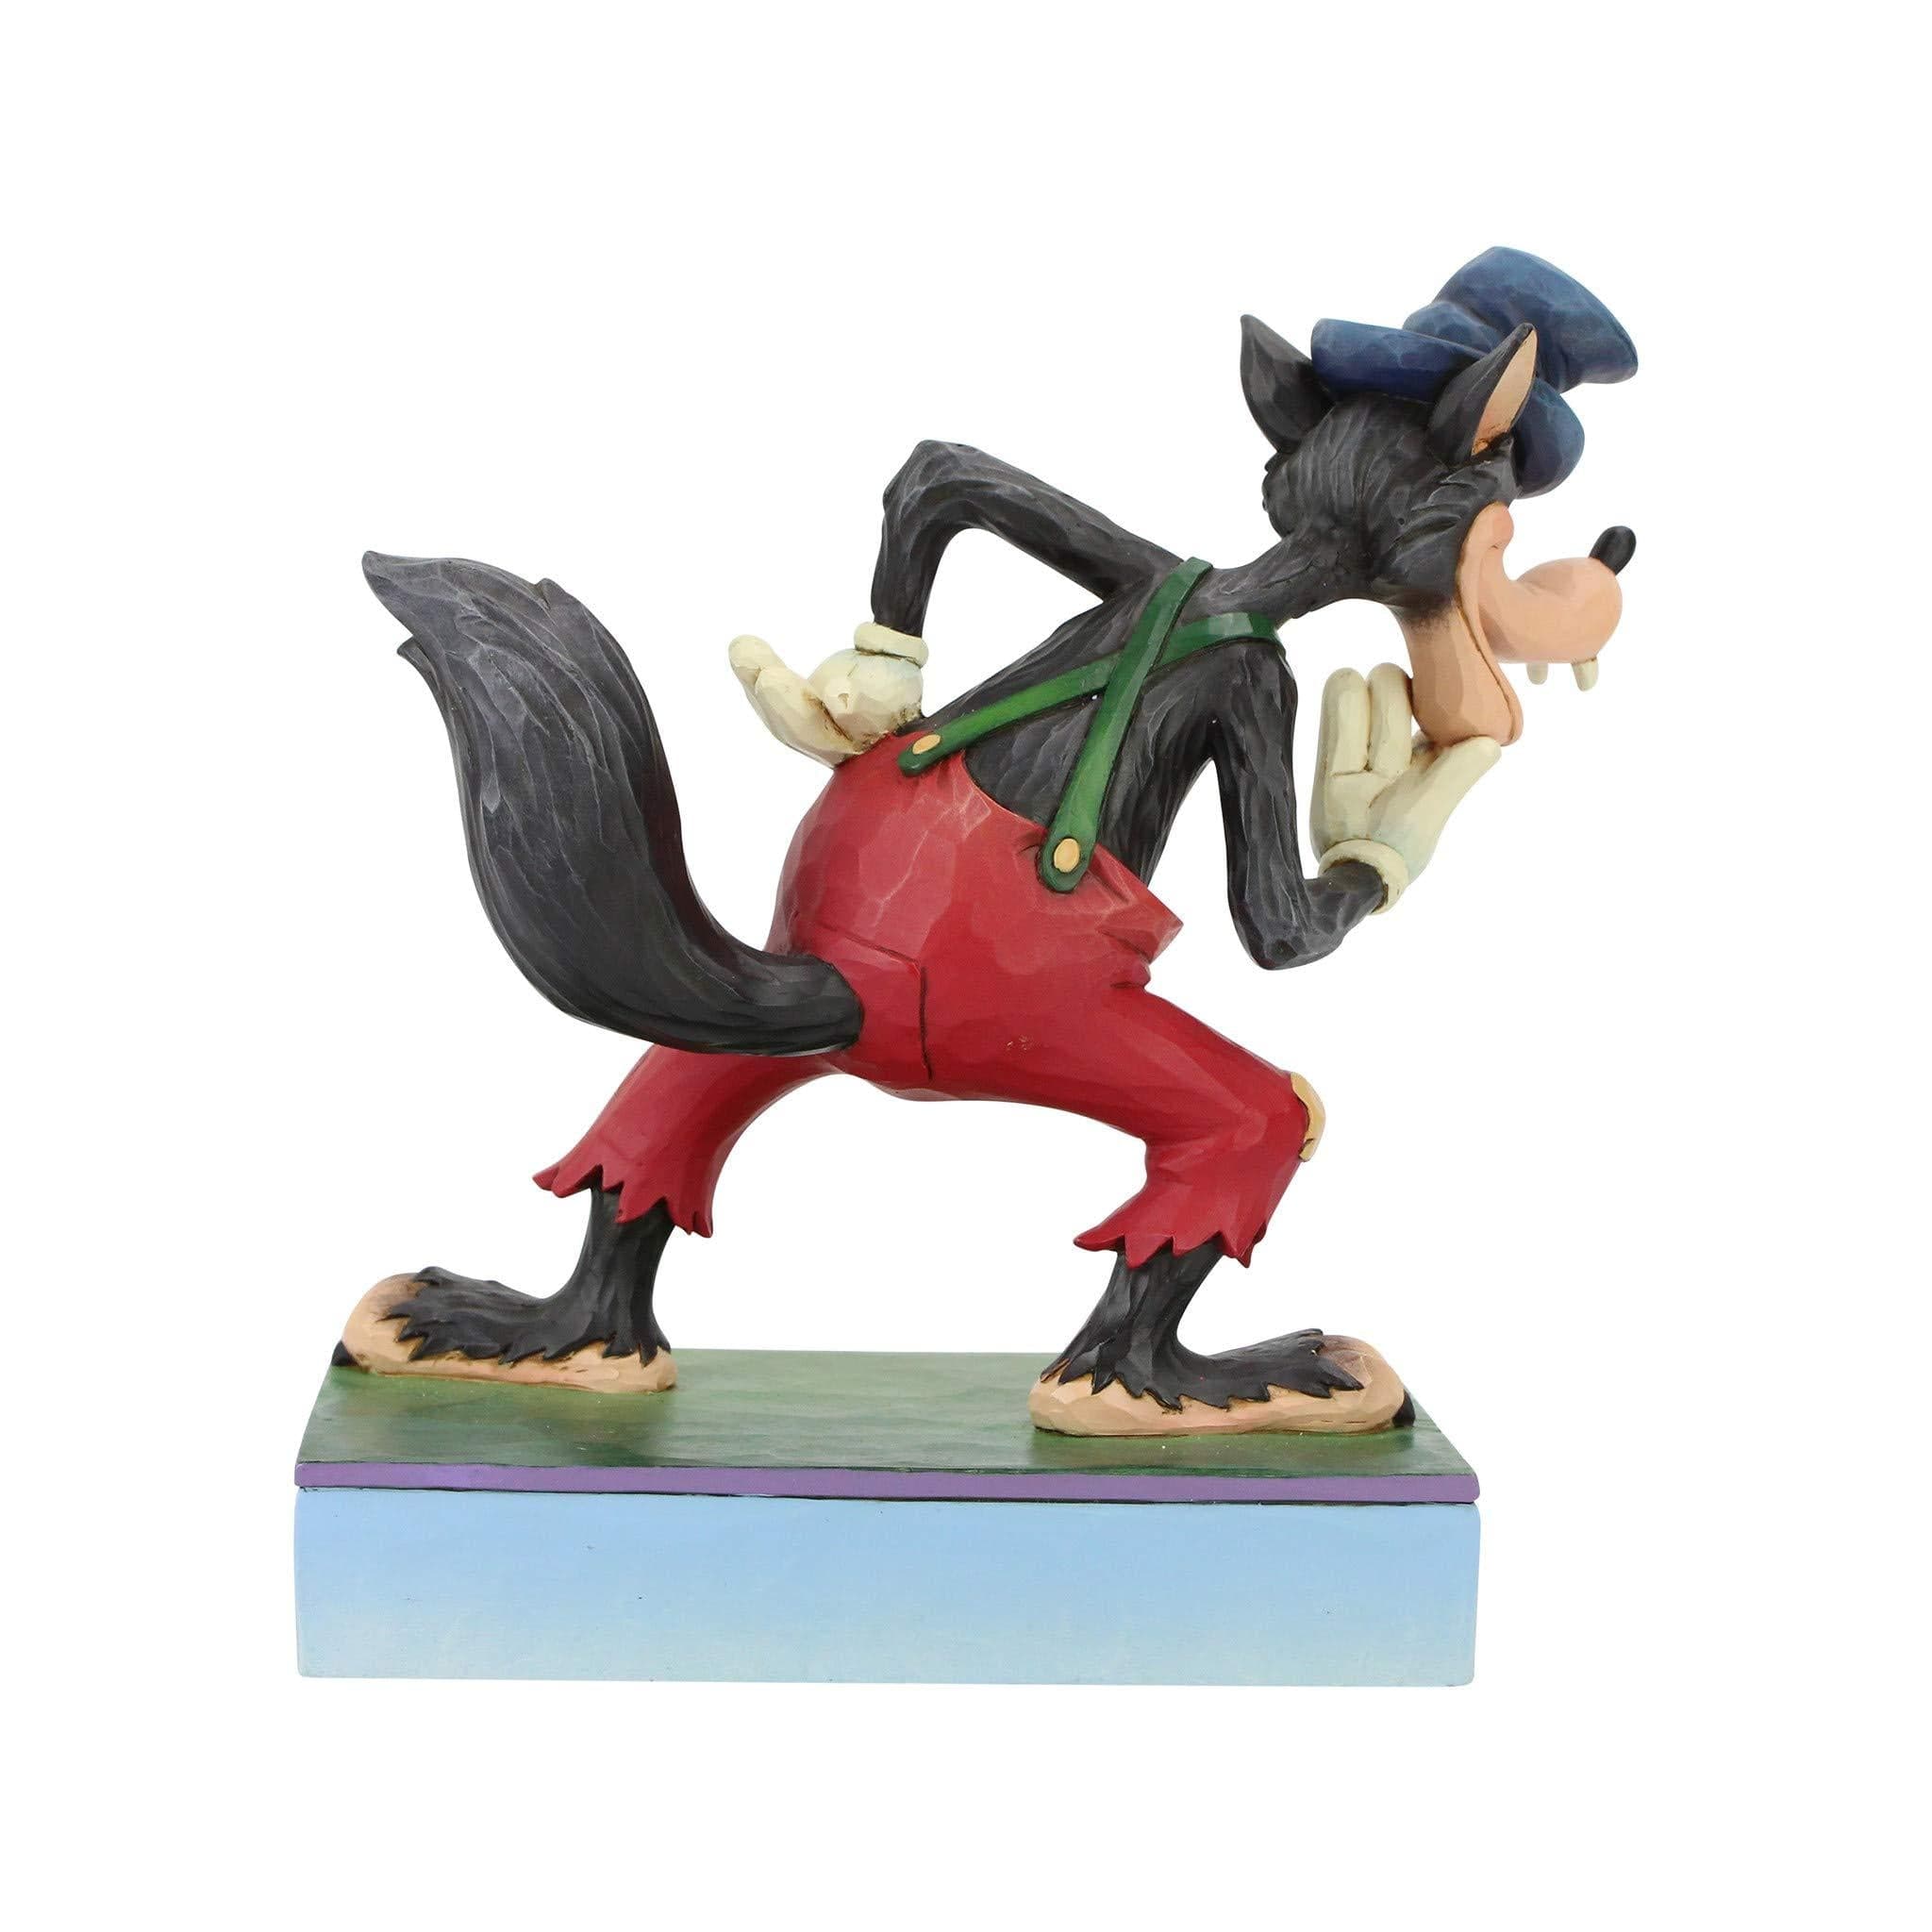 Enesco Disney Ornament Disney Traditions Figurine -  I'll Huff and I'll Puff! (Silly Symphony Big Bad Wolf)